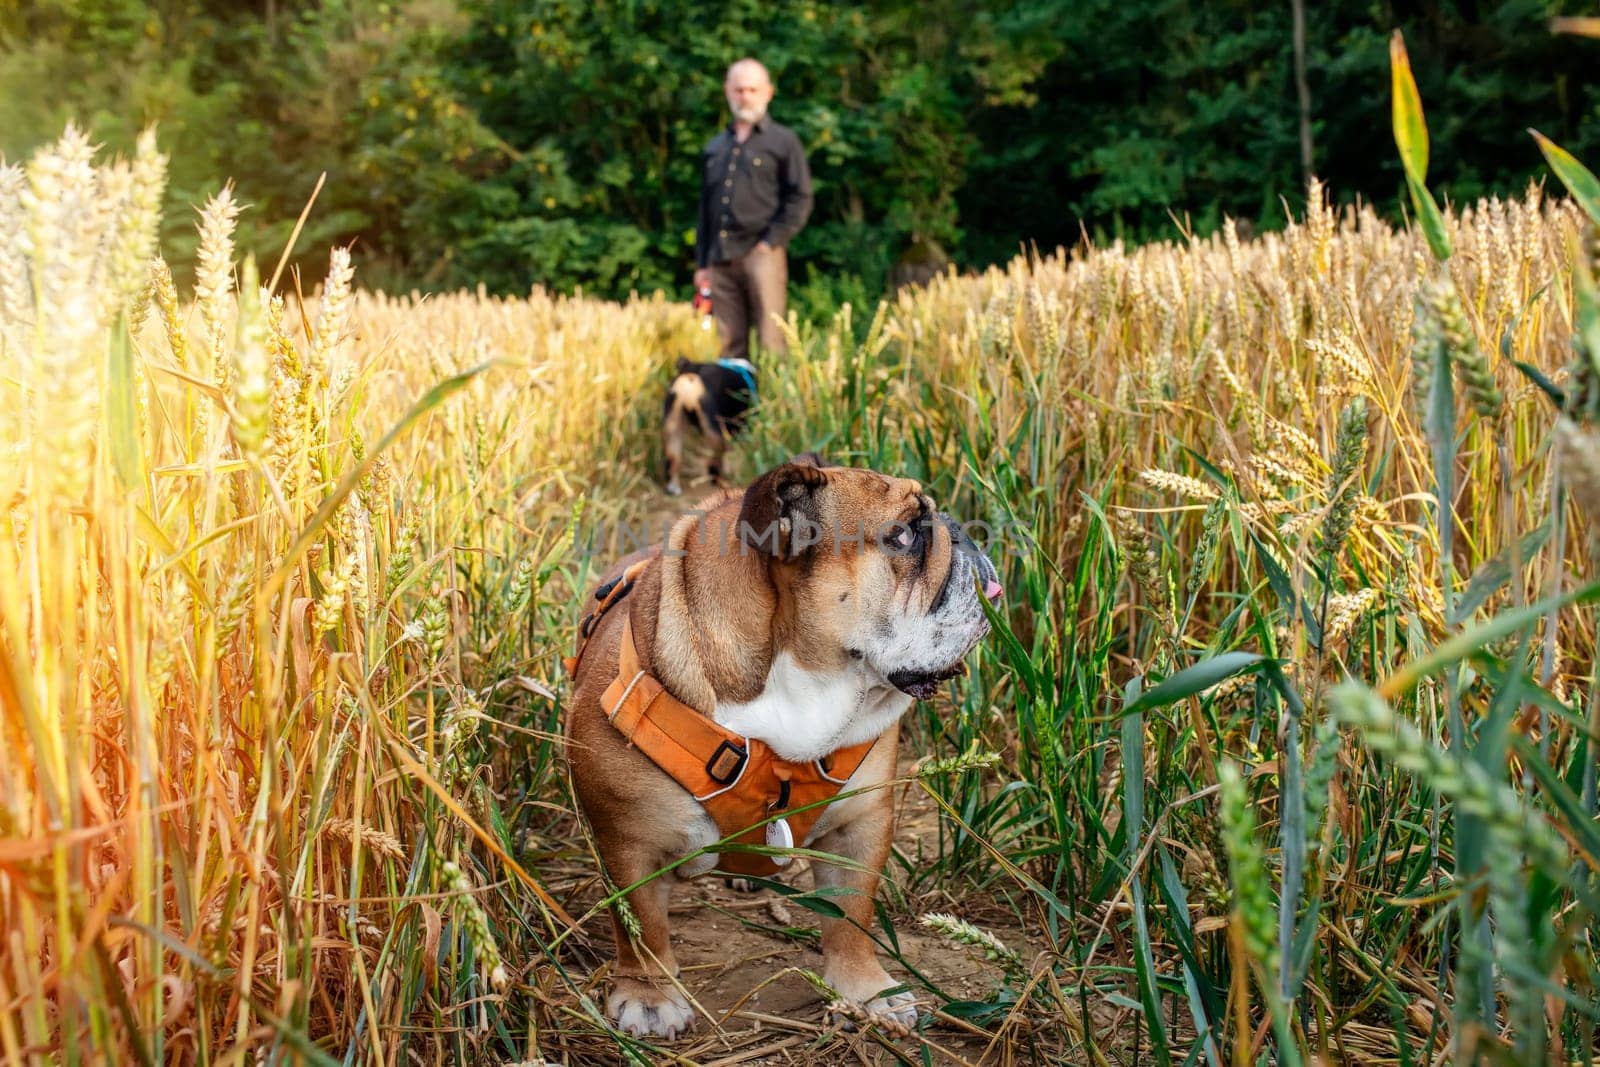 Red English British Bulldog in orange harness  walking in wheat field in warm summer day by Iryna_Melnyk